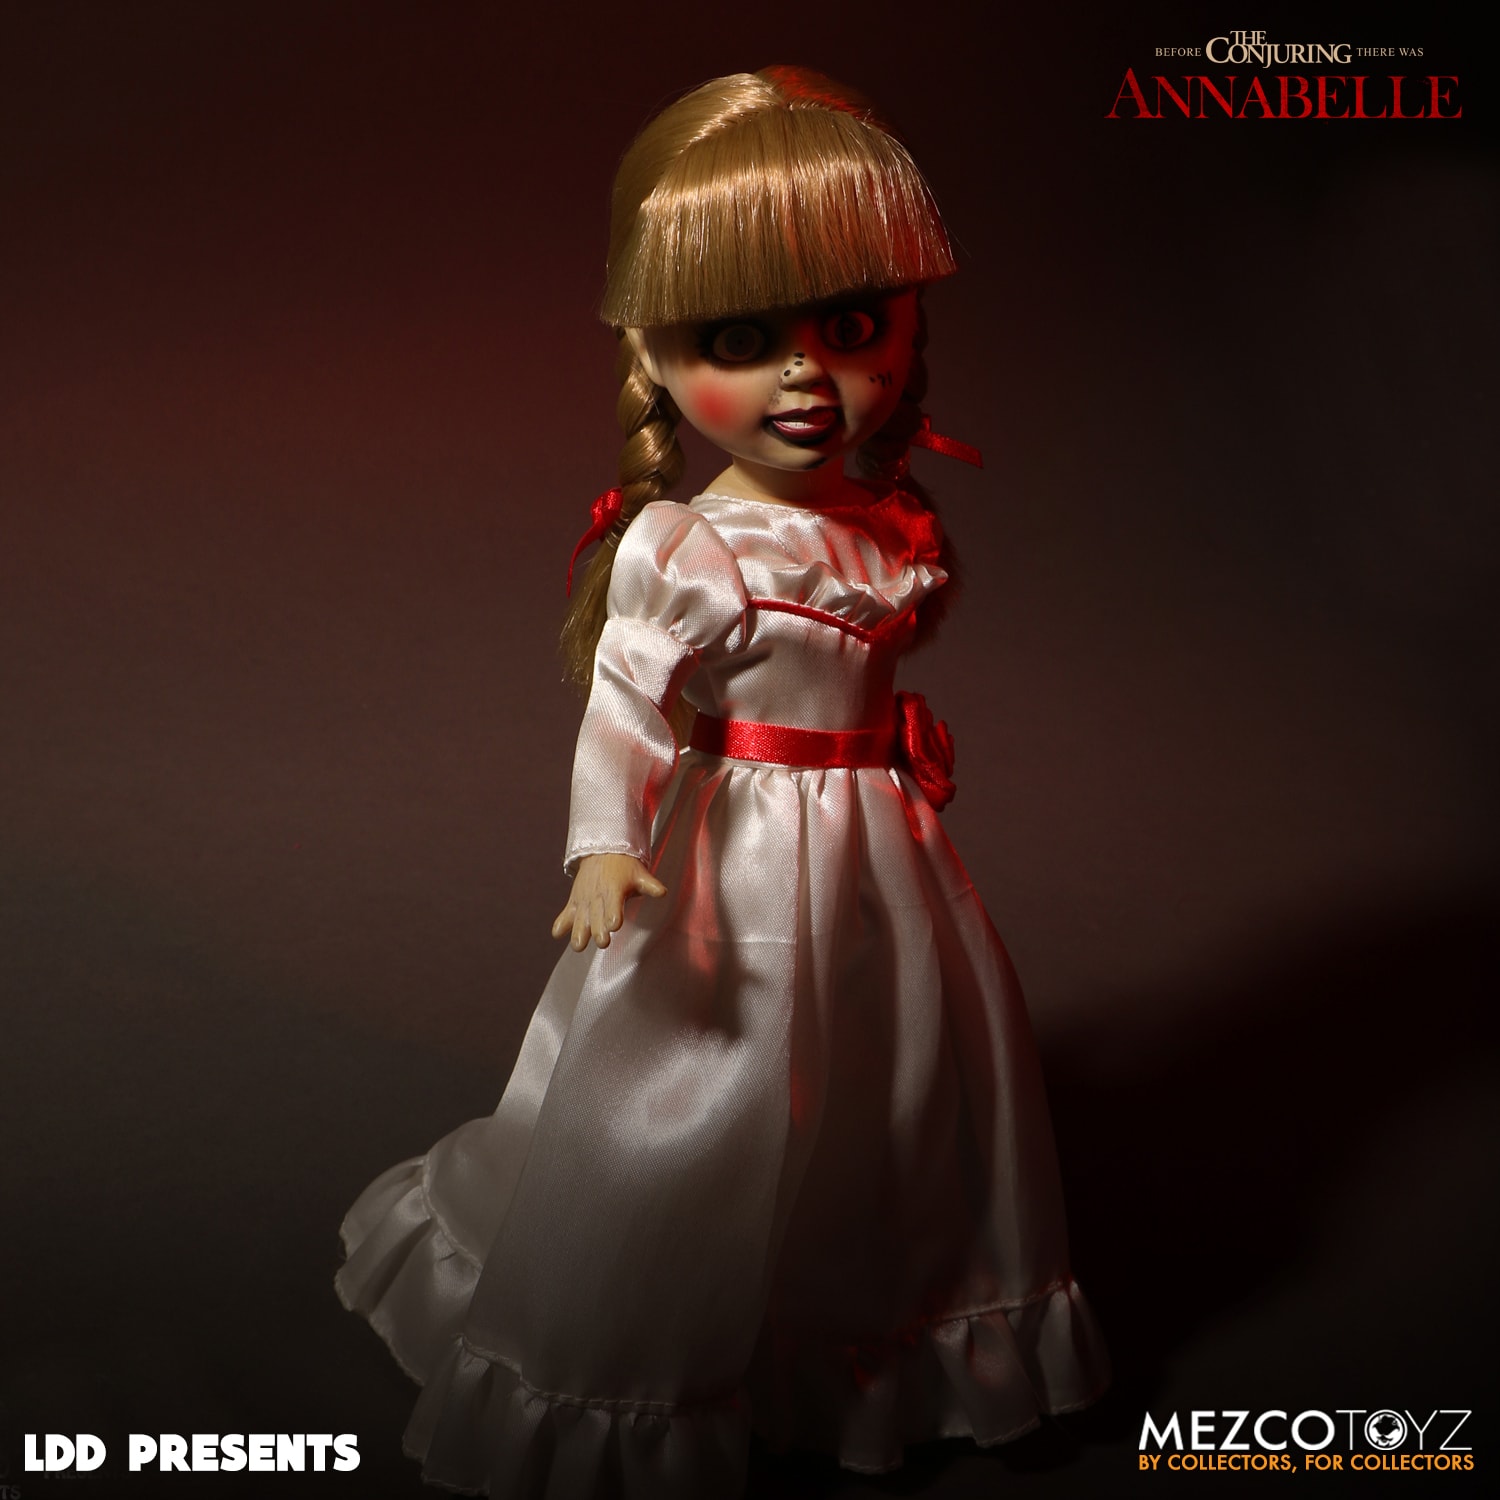 Pre-Order Mezco Annabelle Living Dead Doll